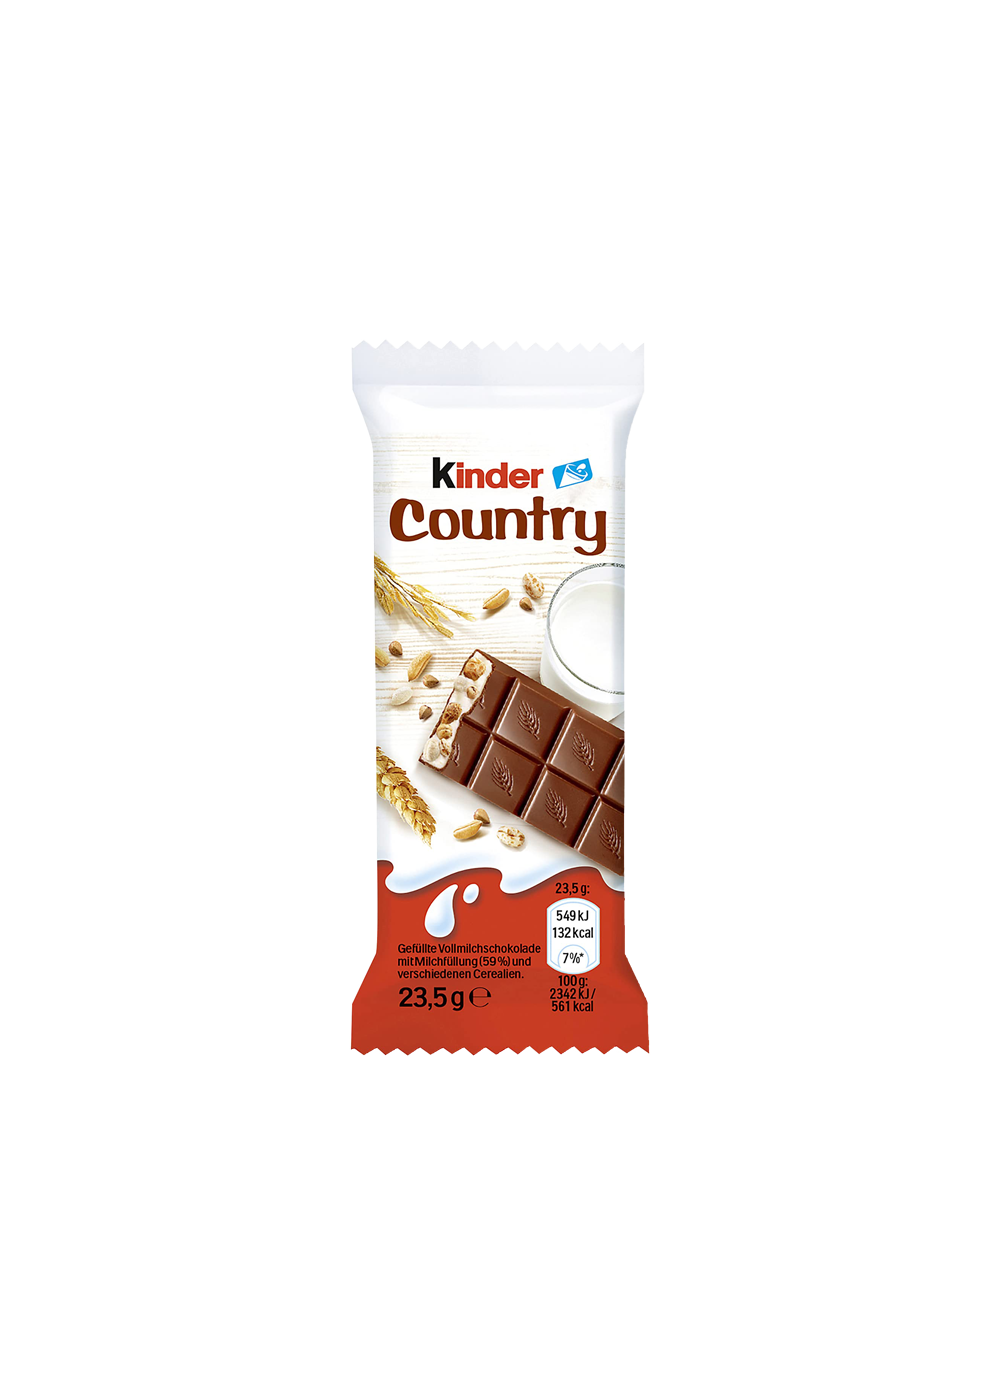 Kinder Country Chocolate Bar 23.5g